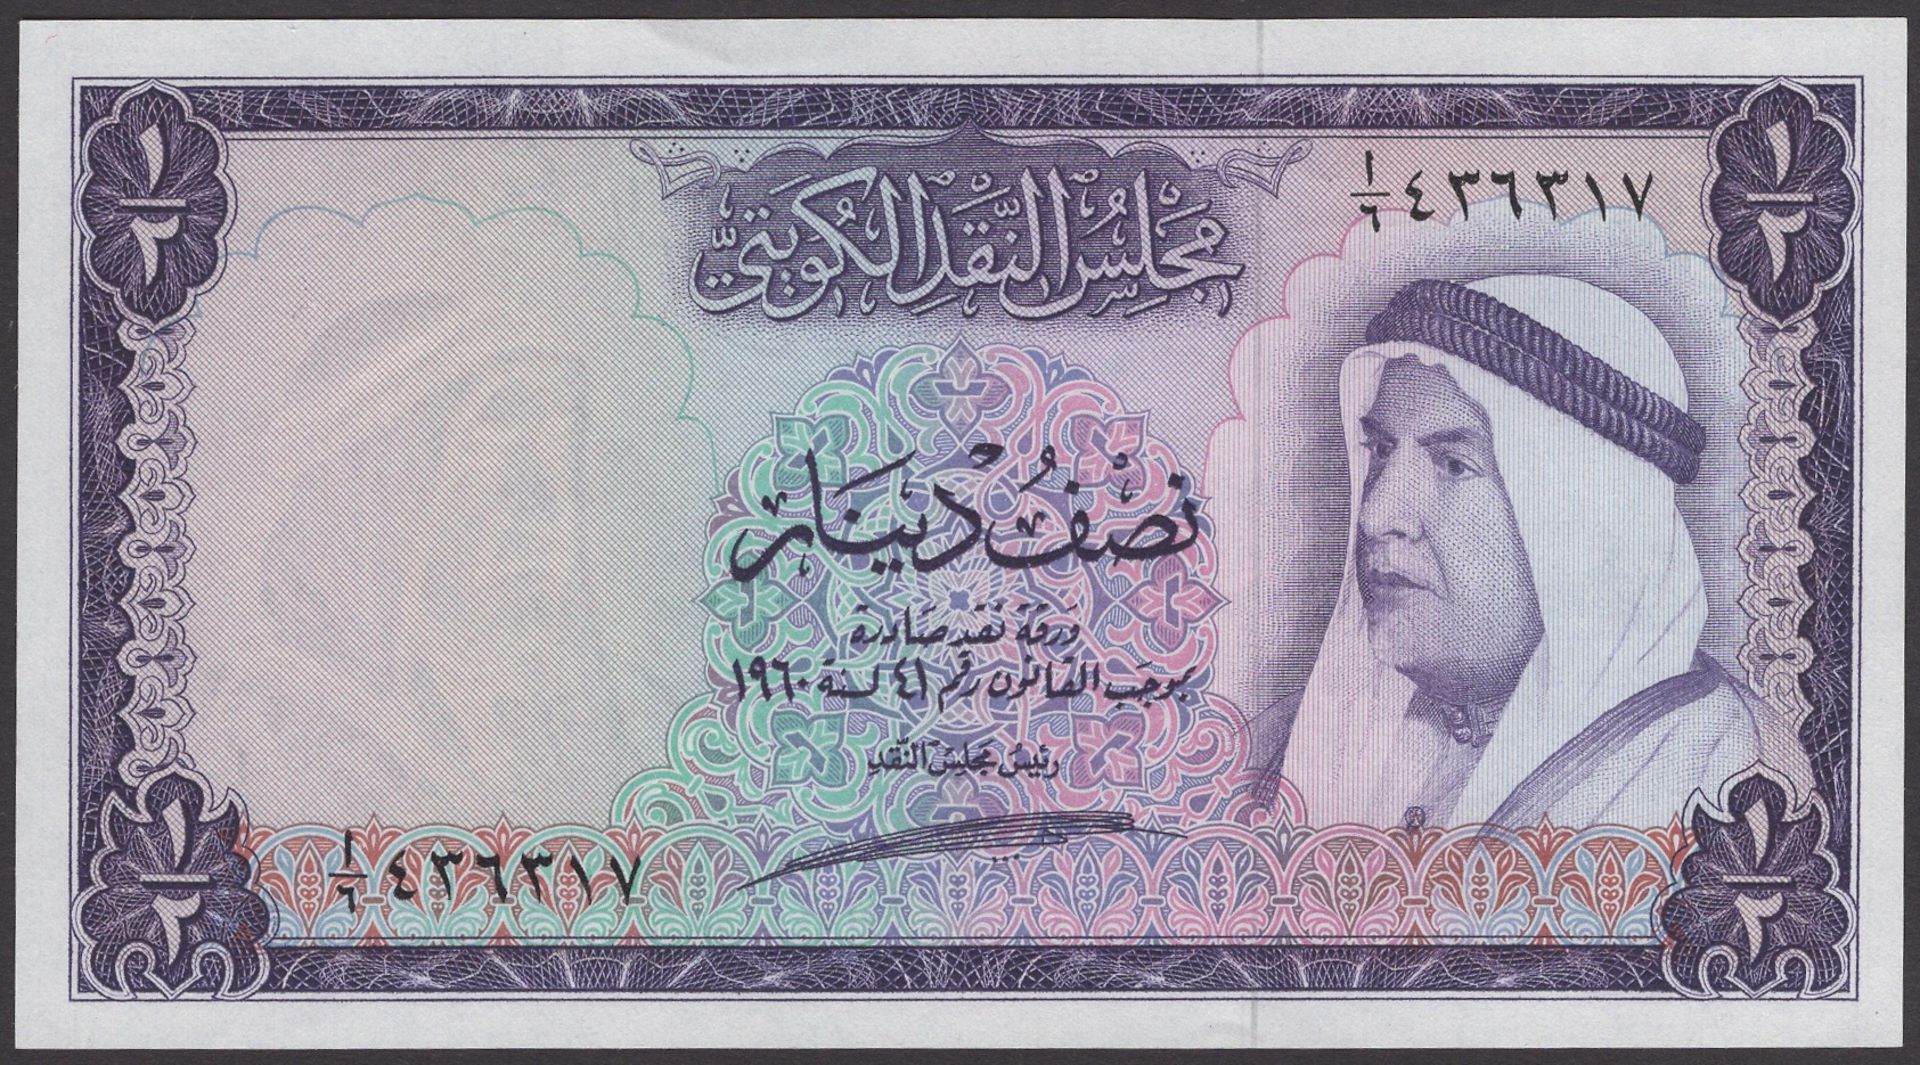 Kuwait Currency Board, 1/2 Dinar, ND (1961), serial number A/6 436317, Al-Sabah signature, u...